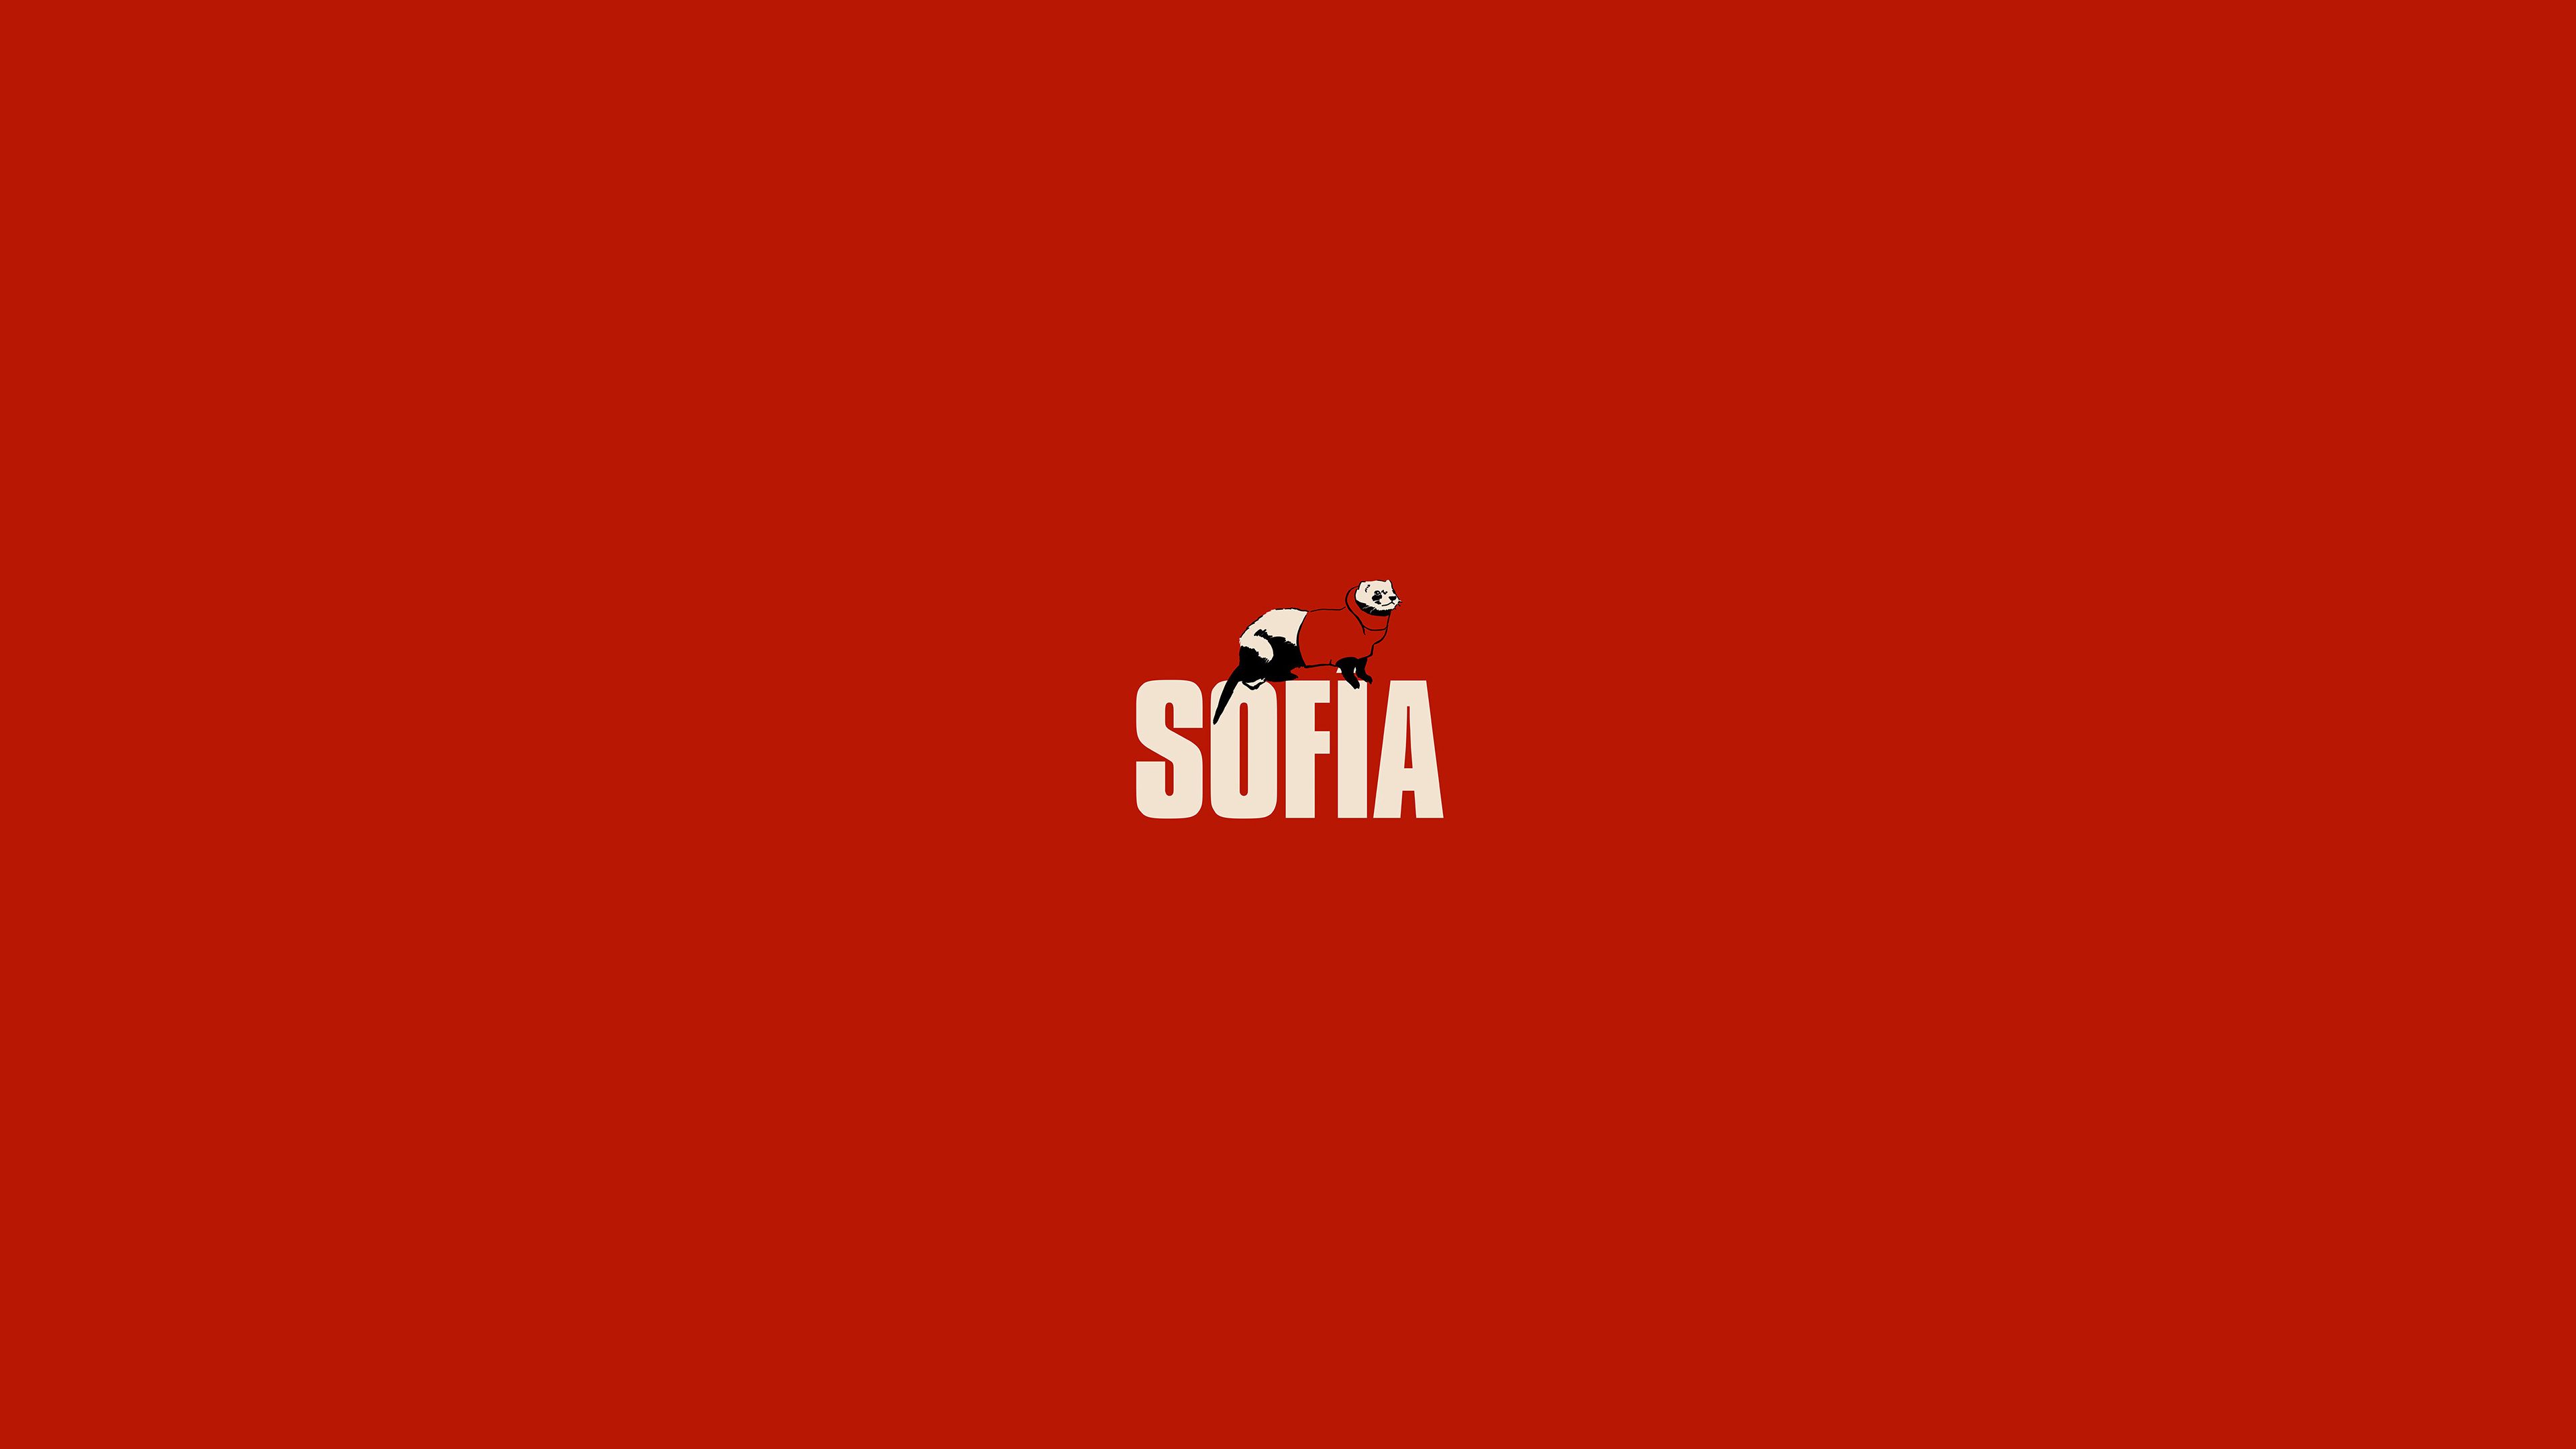 Sofia Money Heist 1080P Laptop Full HD Wallpaper, HD